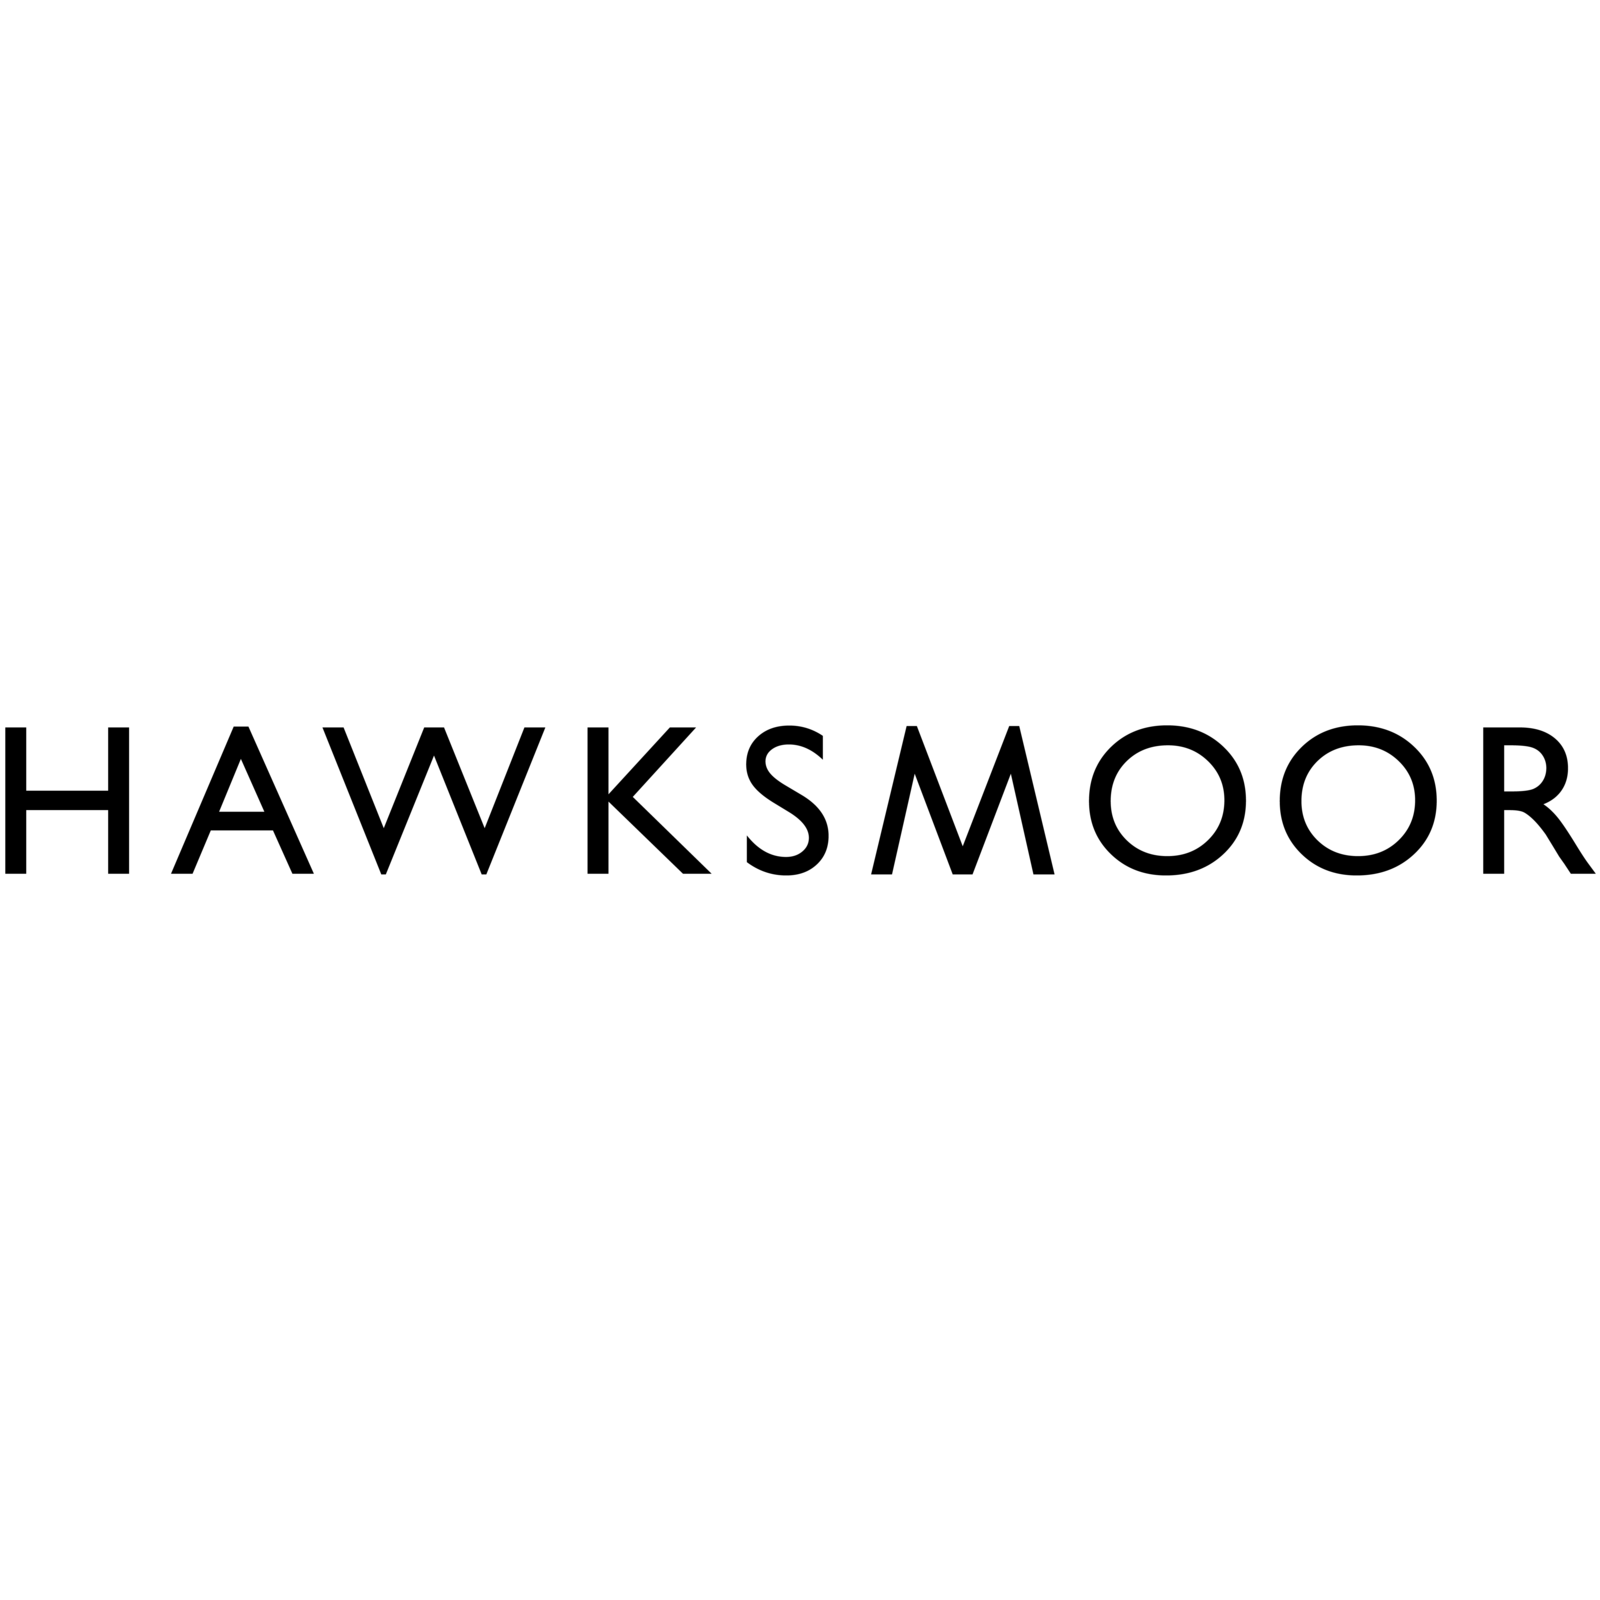 Hawksmoor Borough Logo